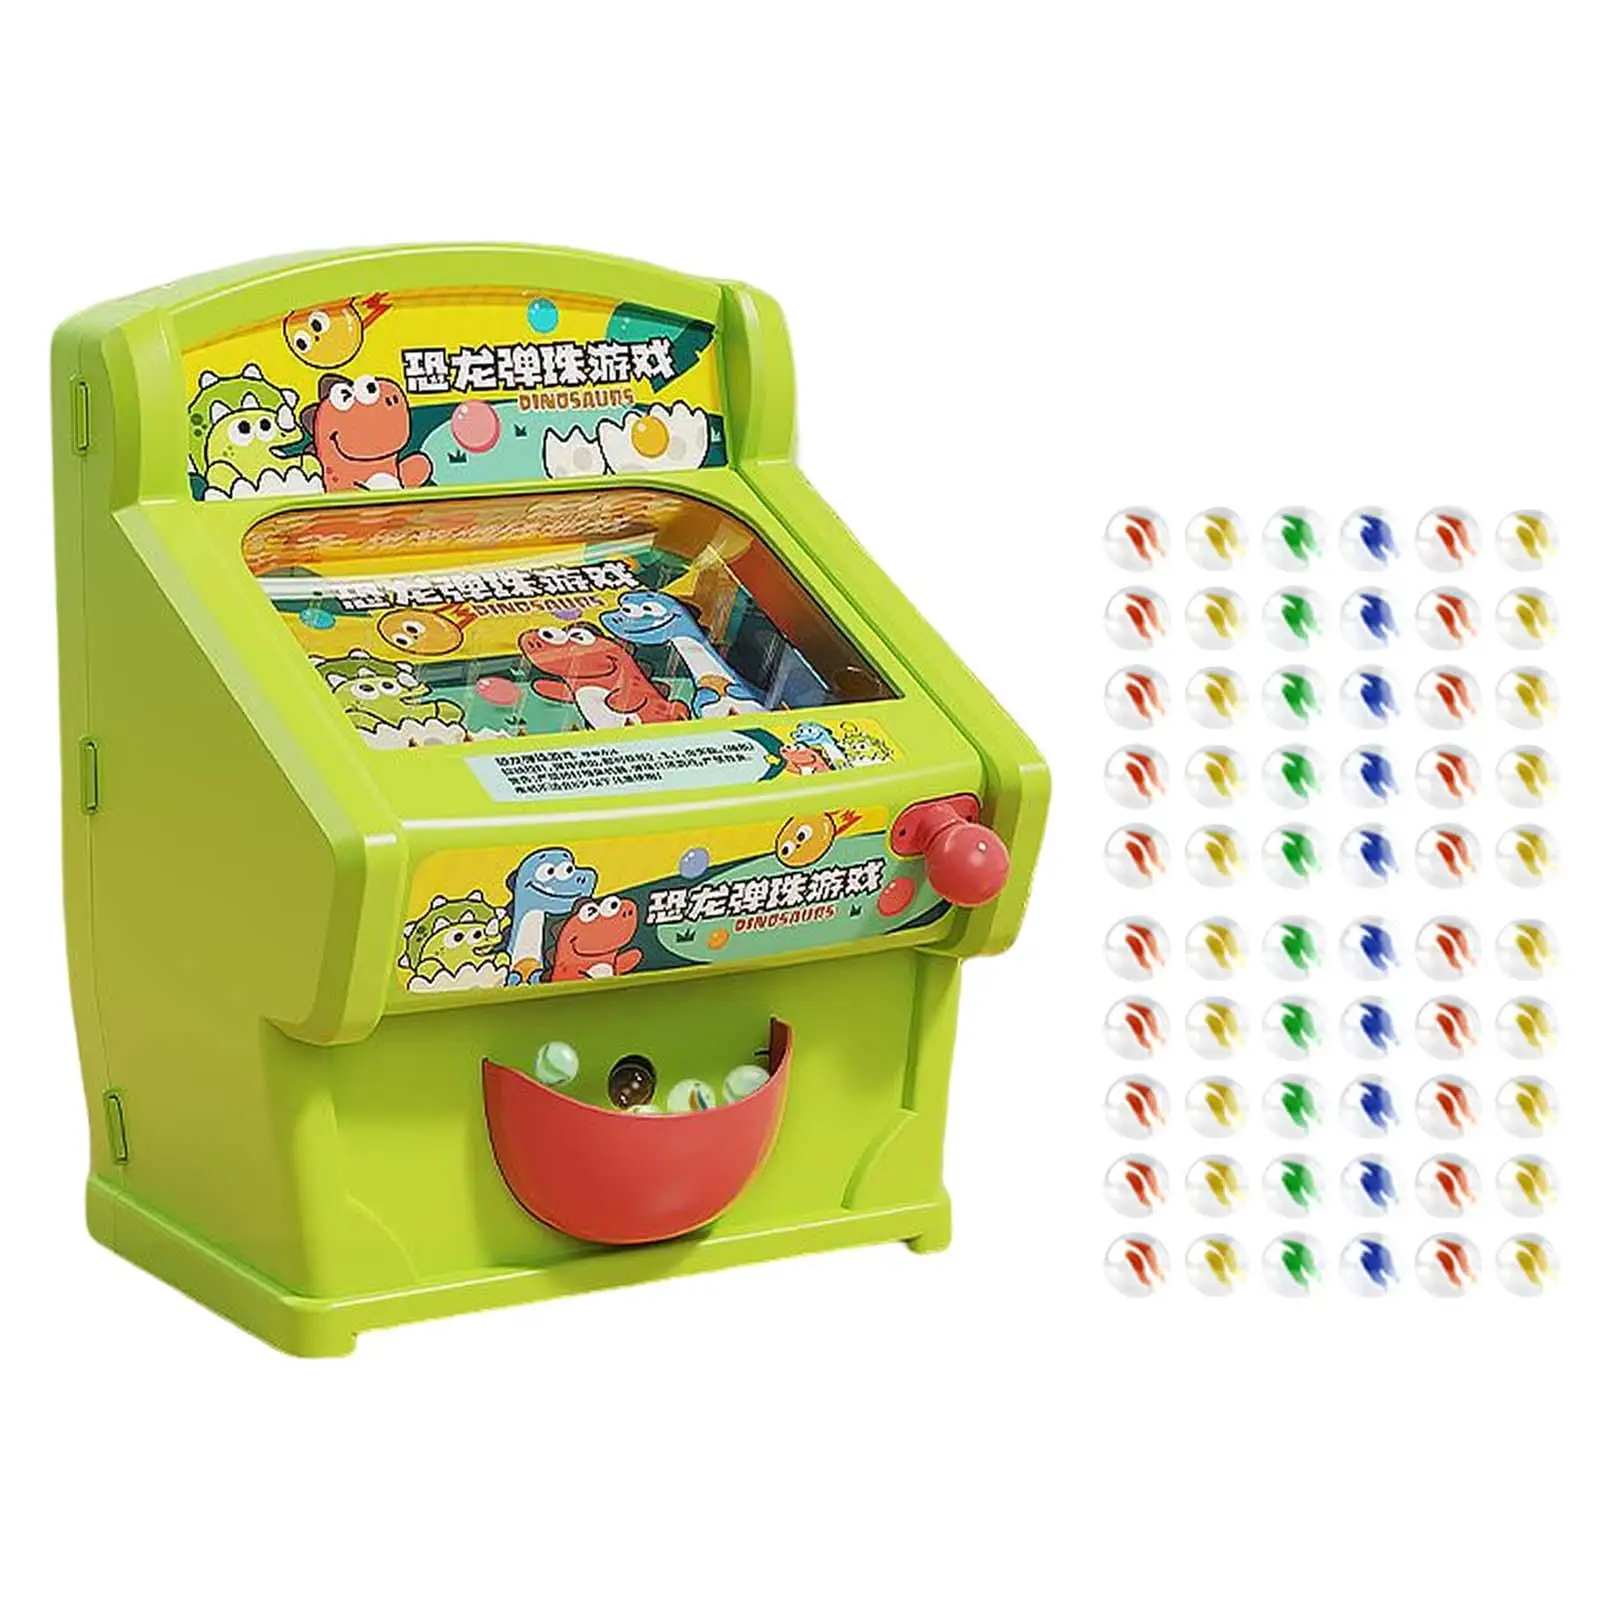 Dinosaur Marble Montessori Developmental Toy Electronic Arcade Machine Interaction Game for Birthday Gift Kids Ages 3 4 5 6